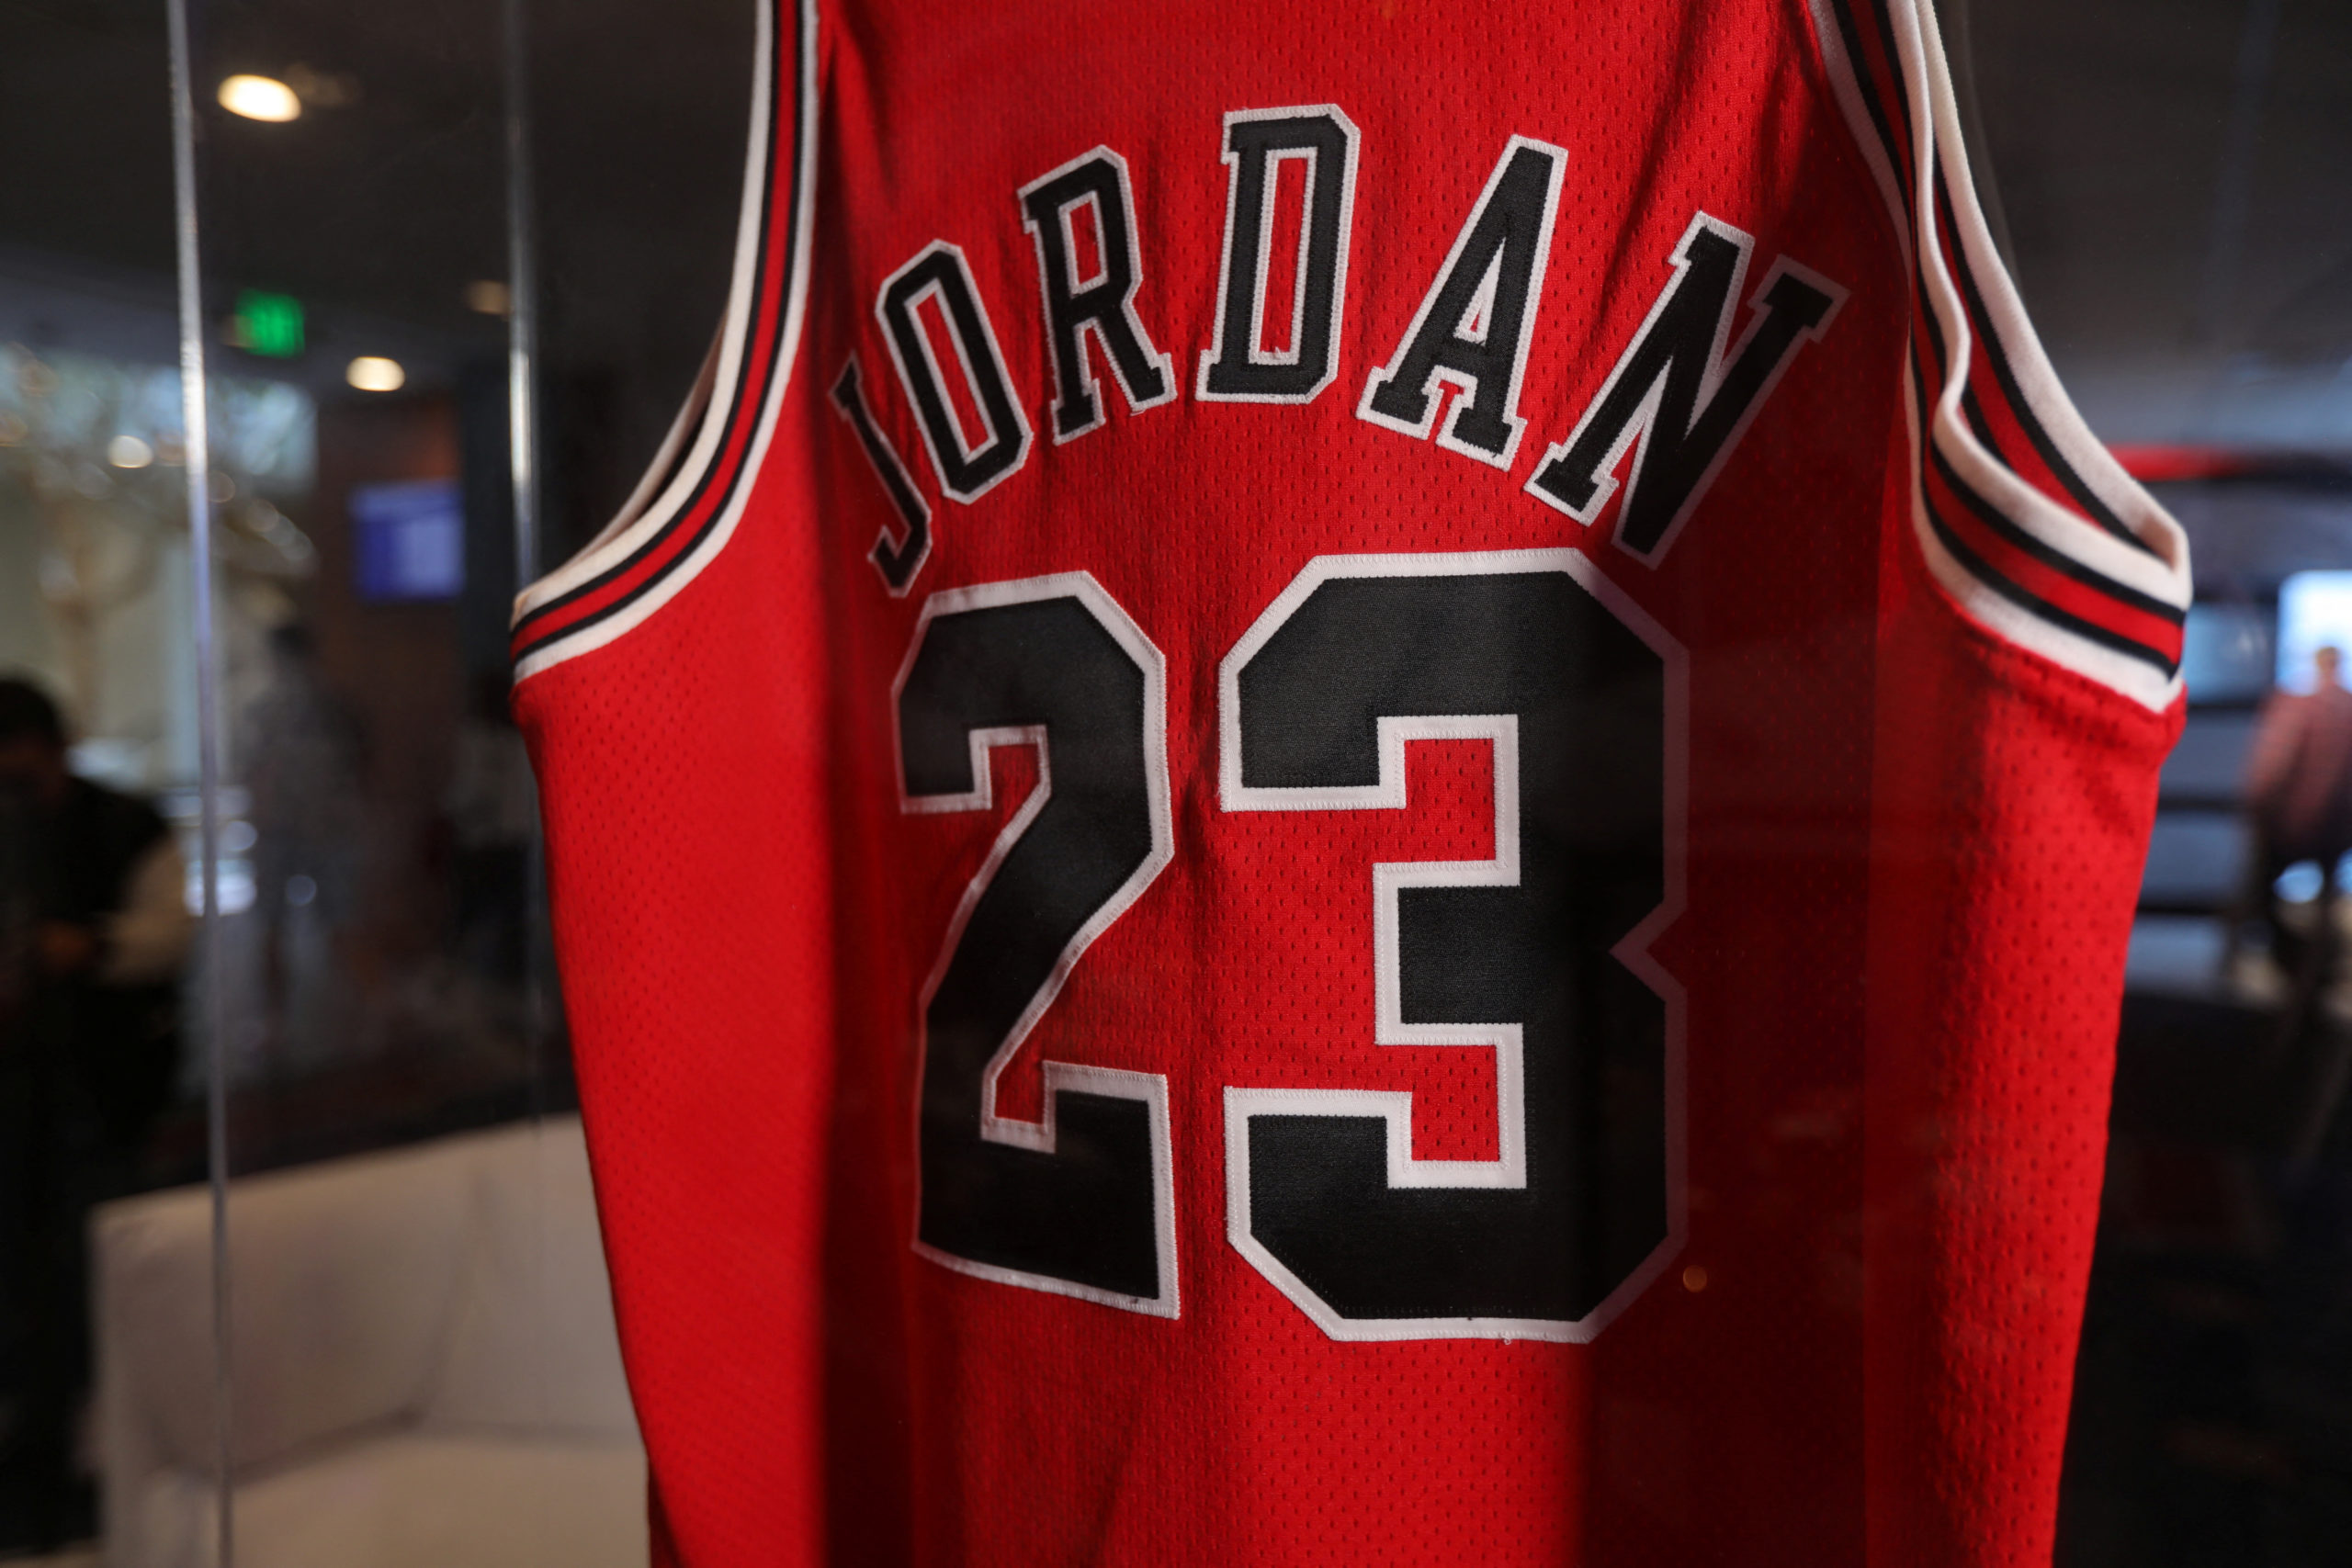 Michael Jordan Game-Worn '97 Bulls Uniform Sells for Record Price at Auction